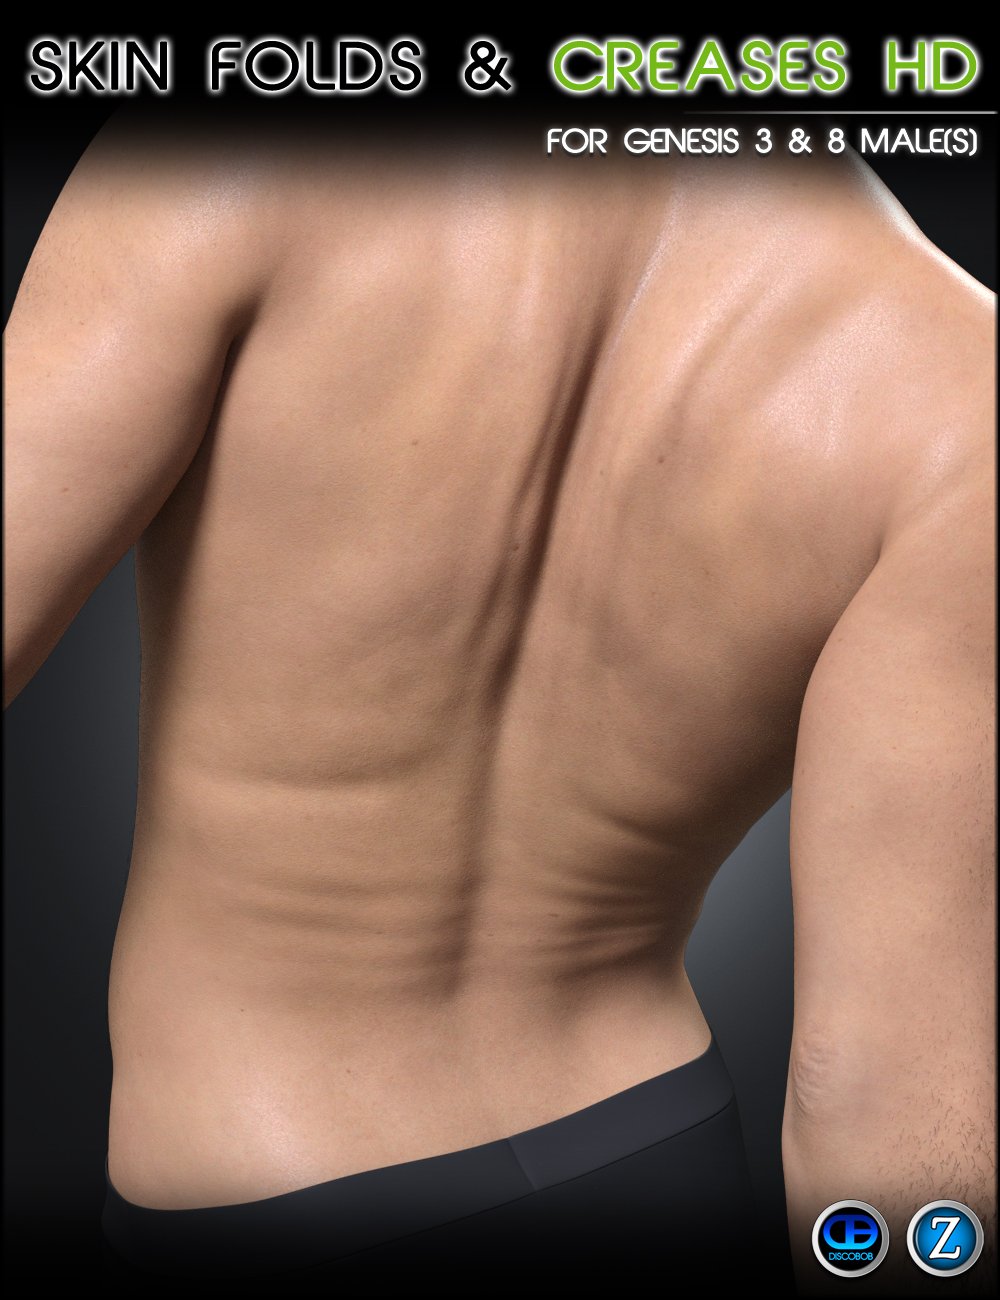 Skin Folds & Creases HD for Genesis 3 & 8 Male by: Zev0Josh Darling, 3D Models by Daz 3D